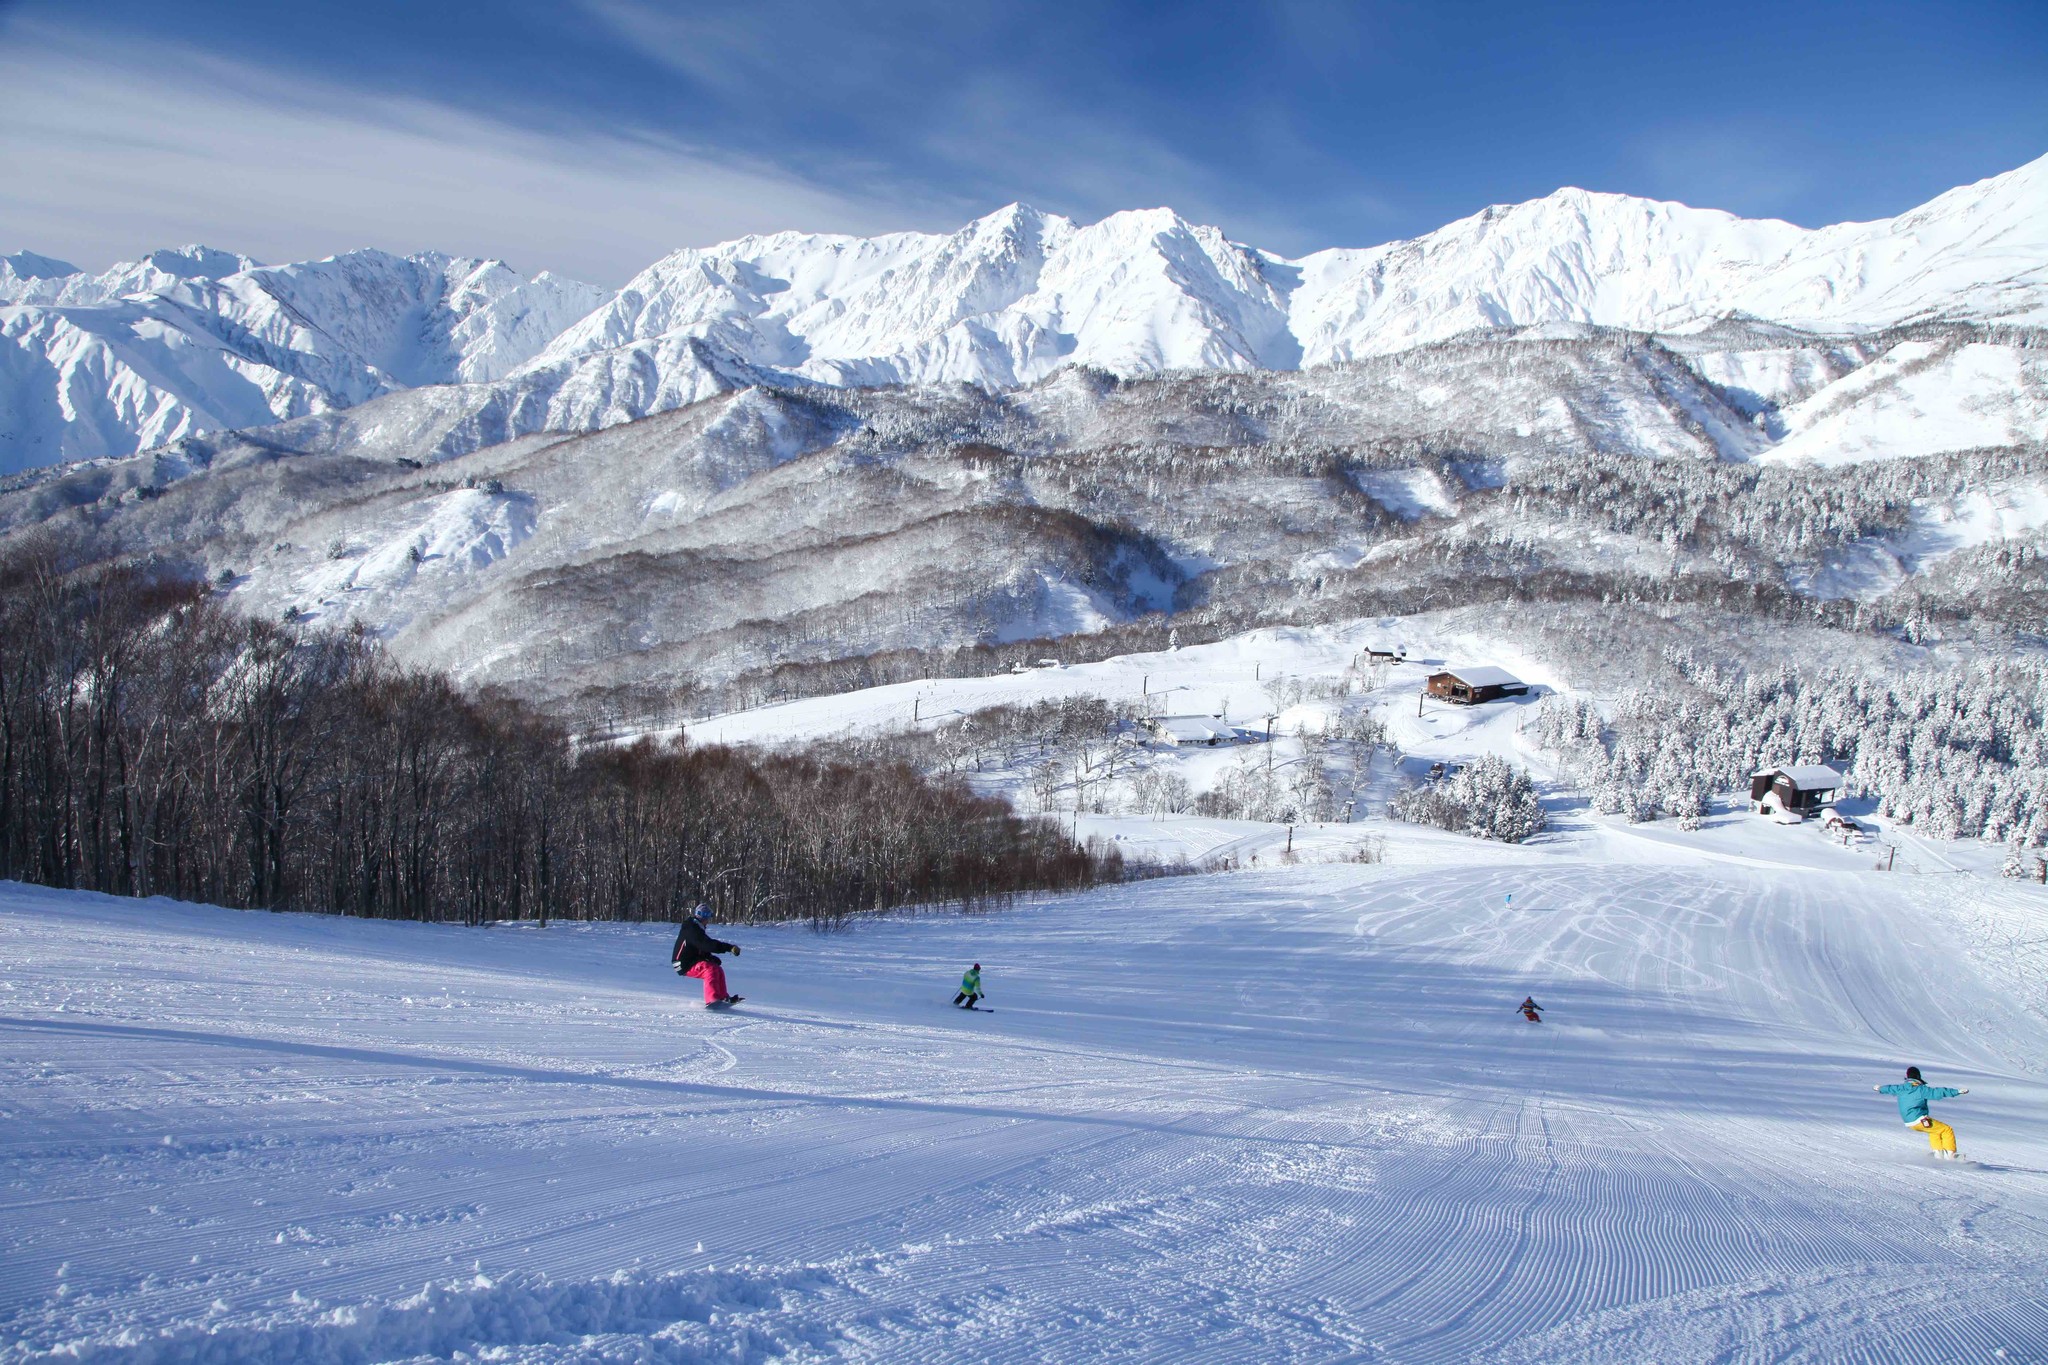 Withコロナ時代の安心安全なスキー場を目指して 白馬エリアの3つのスキー場で冬季営業方針を決定 白馬観光開発株式会社のプレスリリース